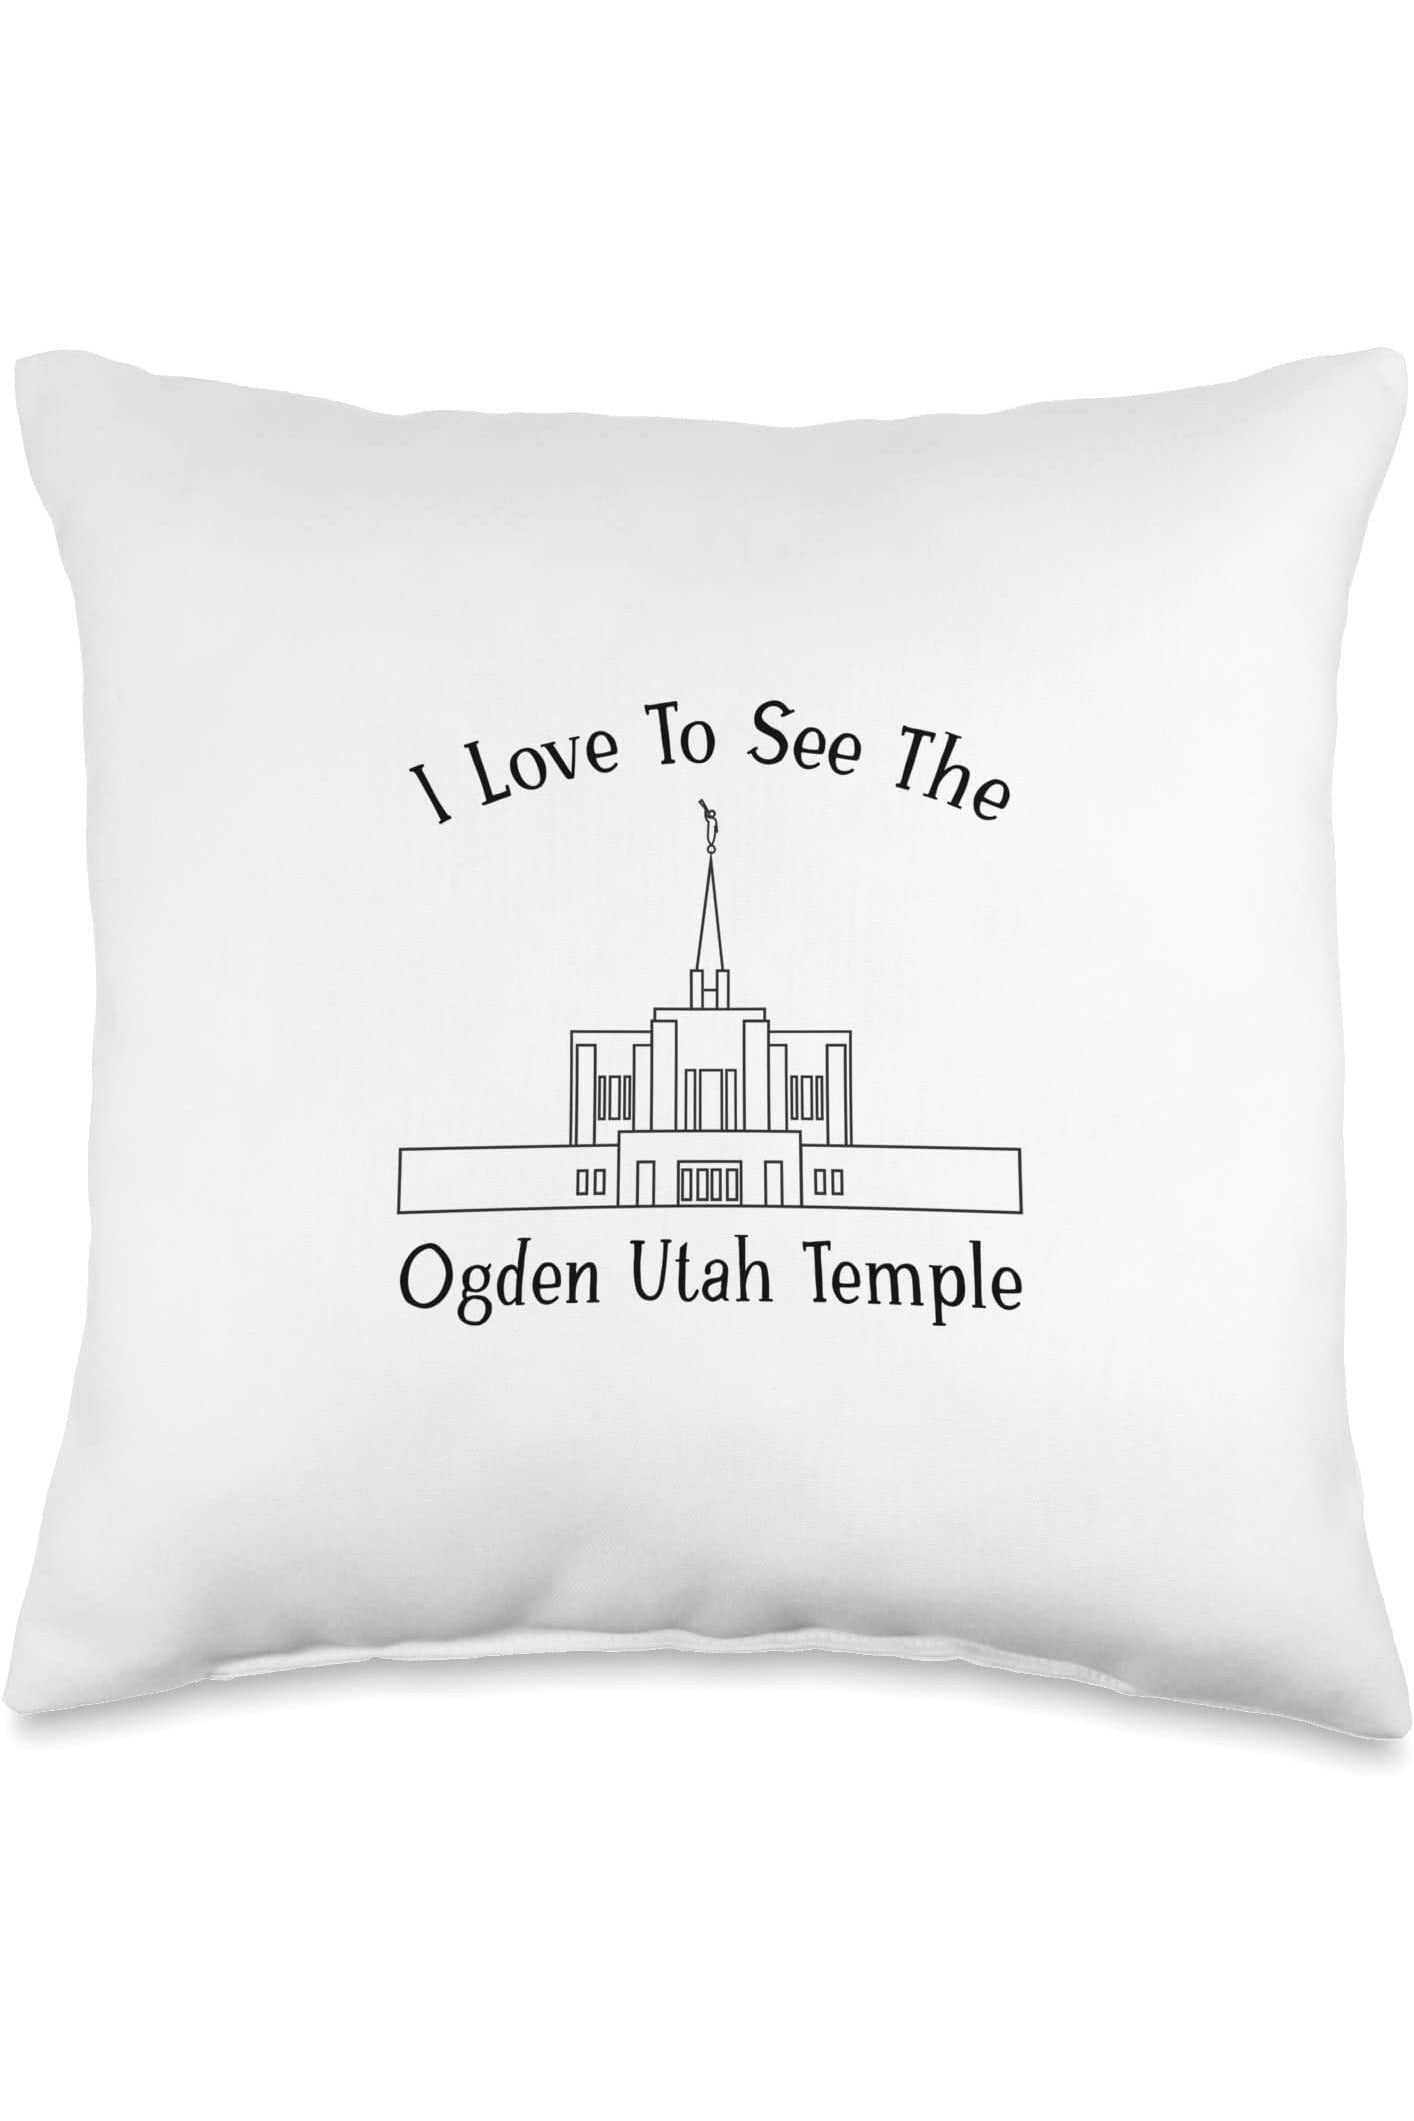 Ogden Utah Temple Throw Pillows - Happy Style (English) US